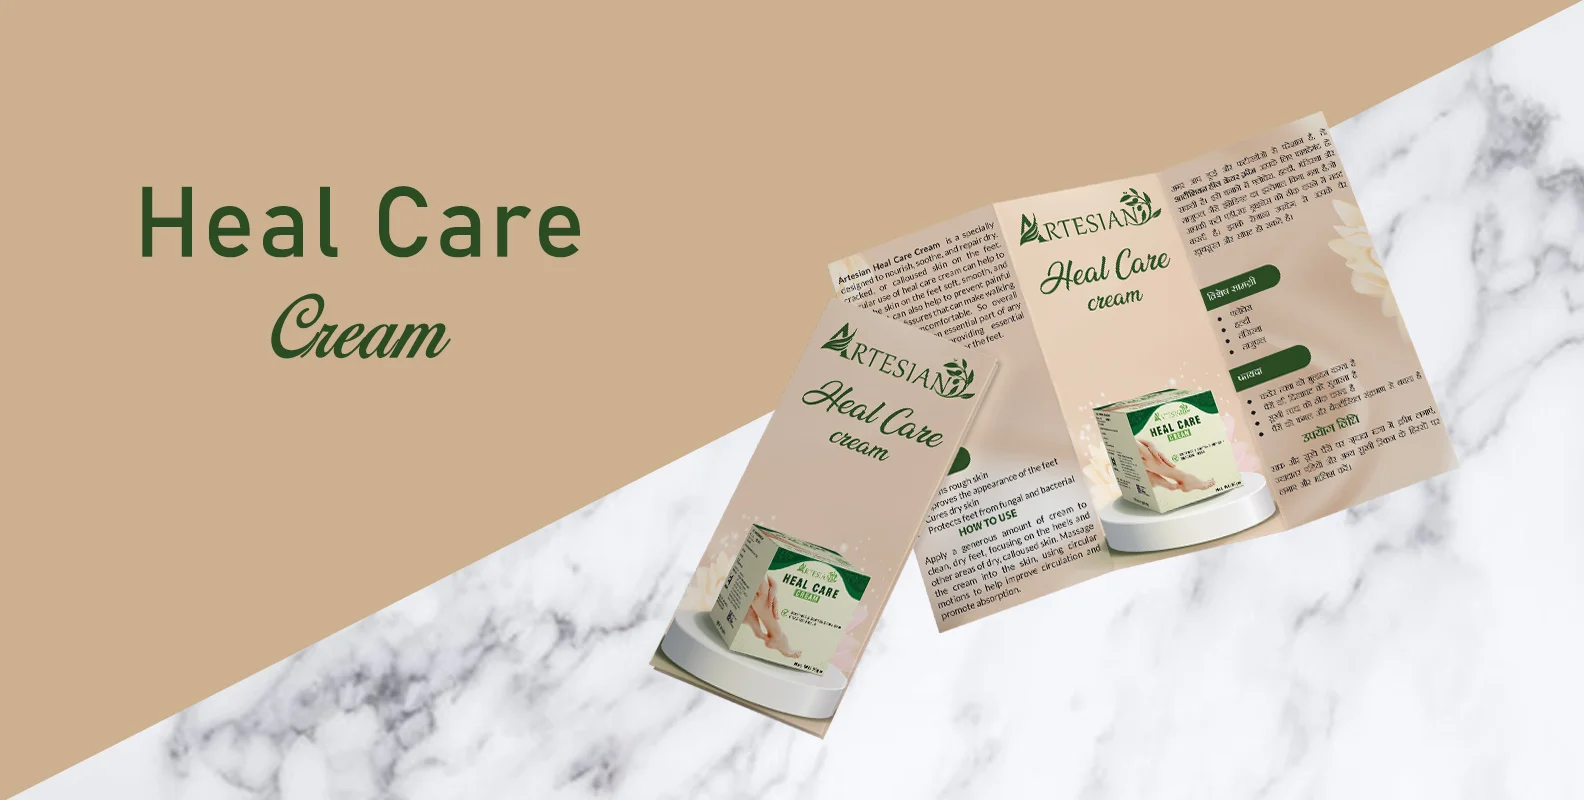 Artesian Heal Care Cream